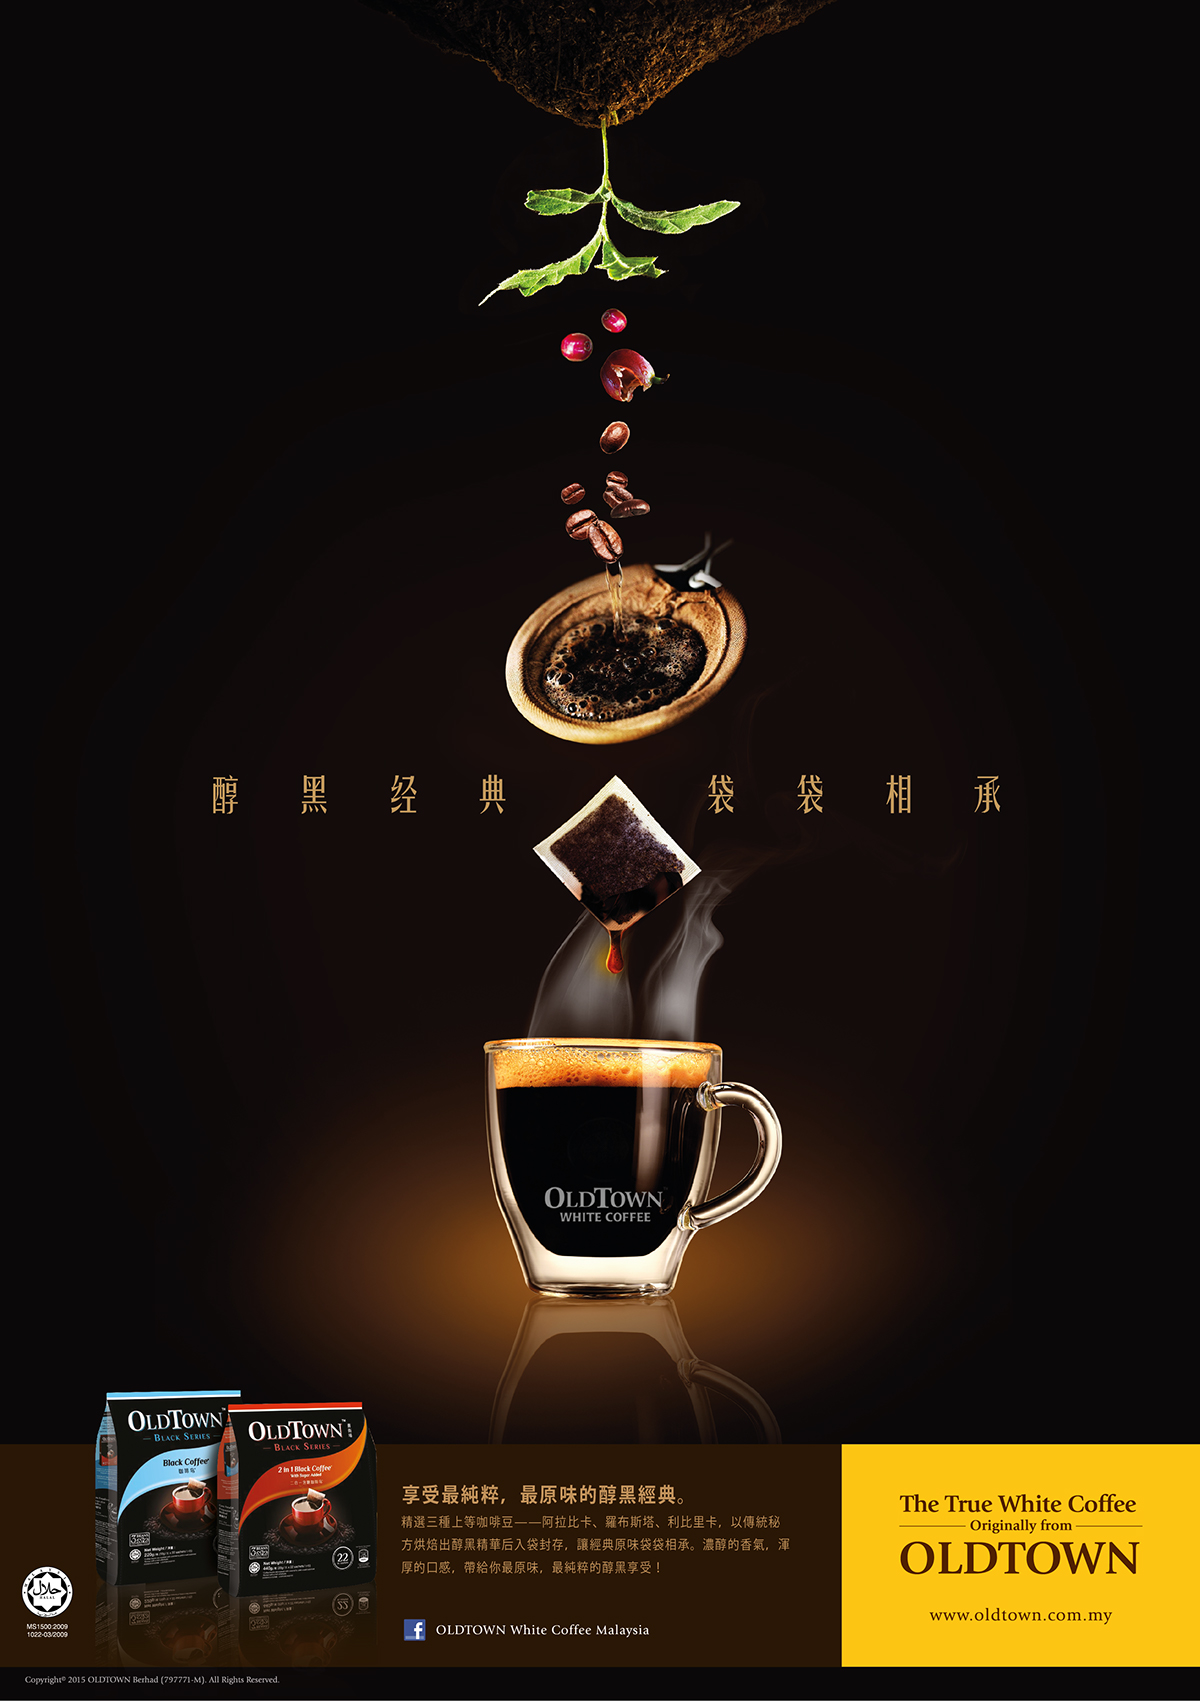 Malaysia Brand malaysia oldtown Coffee print ad key visual poster Black Coffee local brand